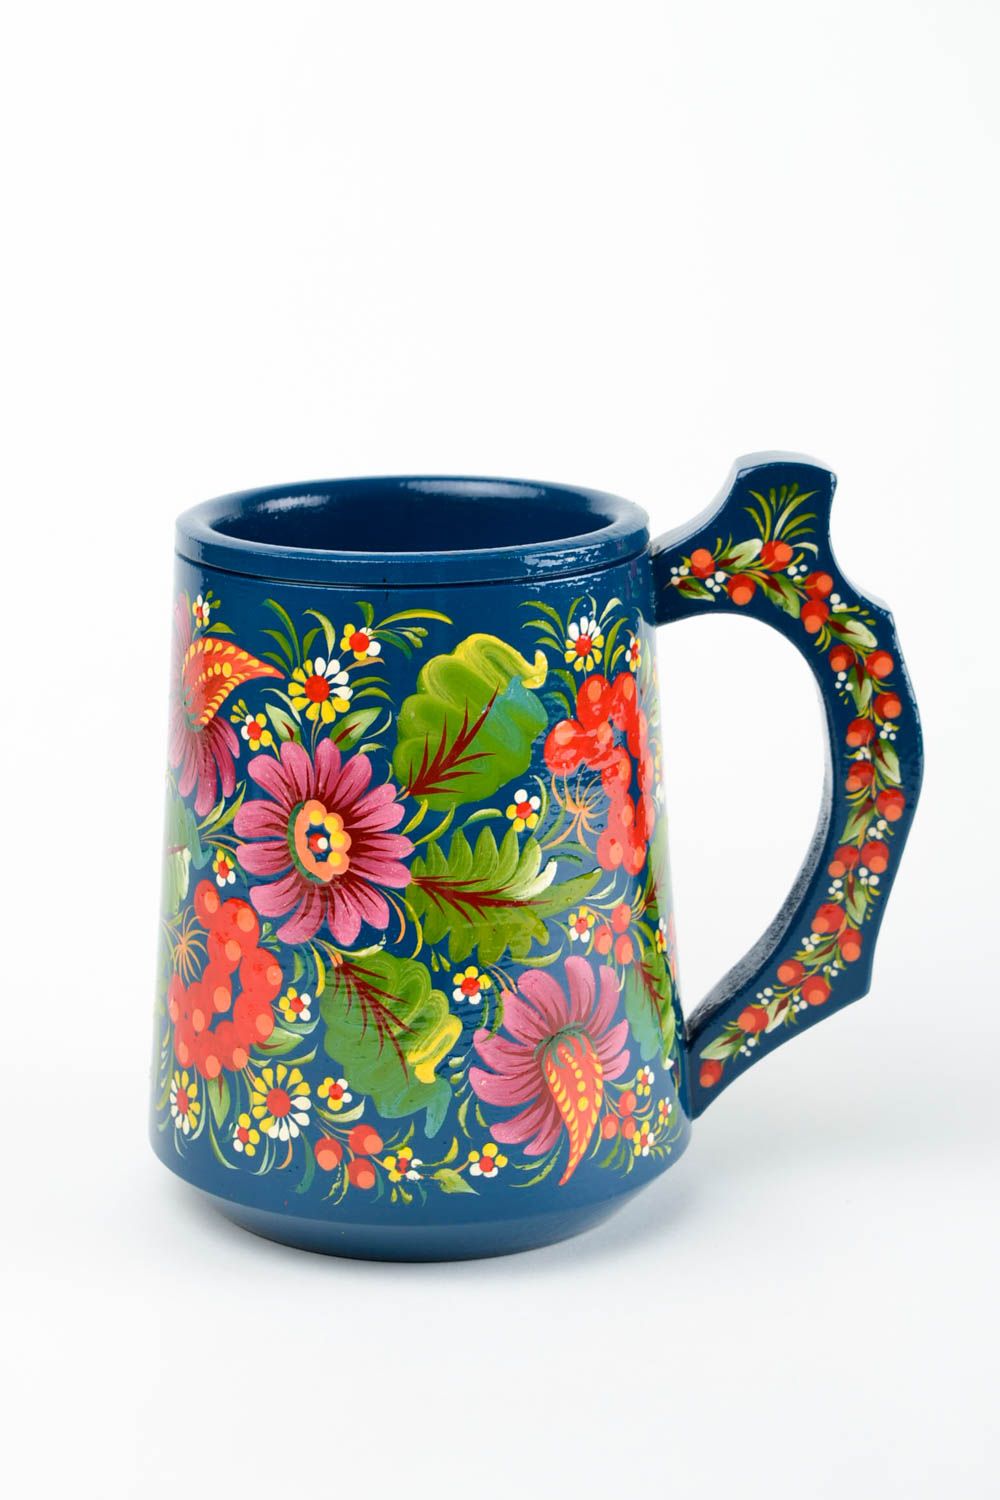 Handmade mug designer wooden glass unusual gift decorative use only decor ideas photo 4